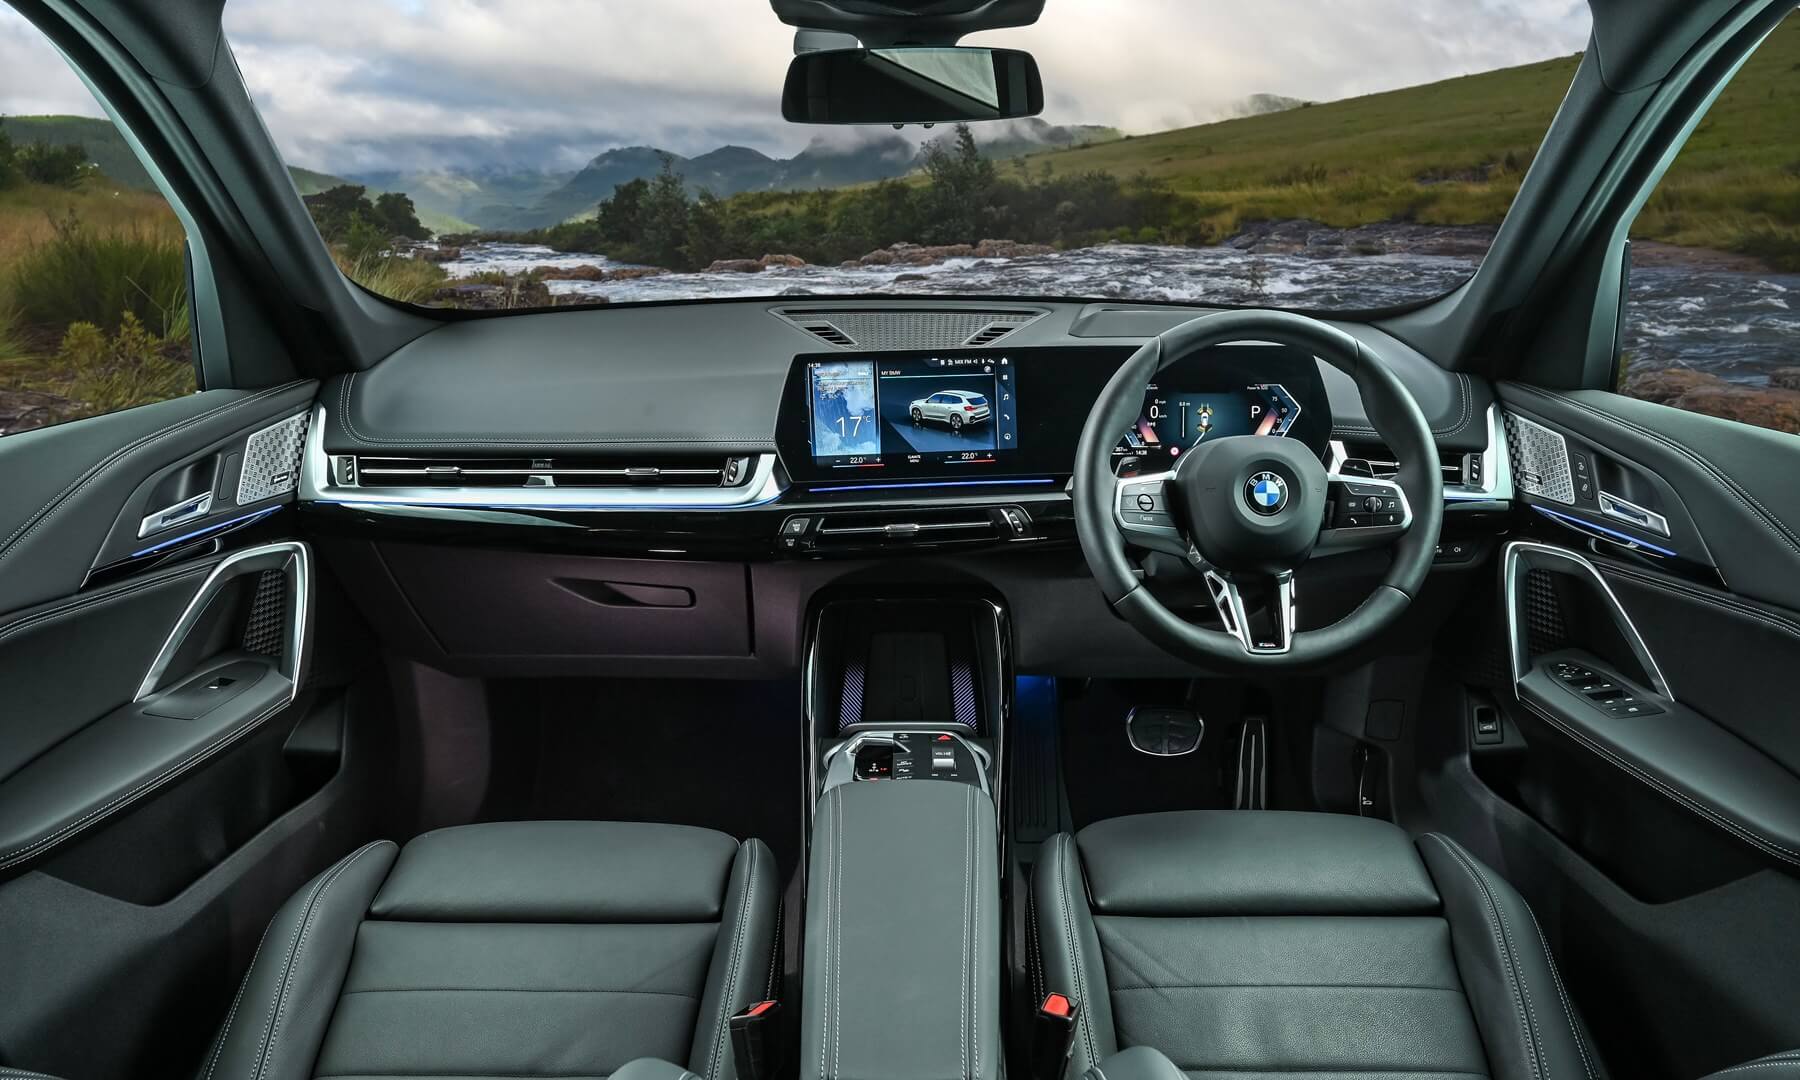 BMW X1 18d interior